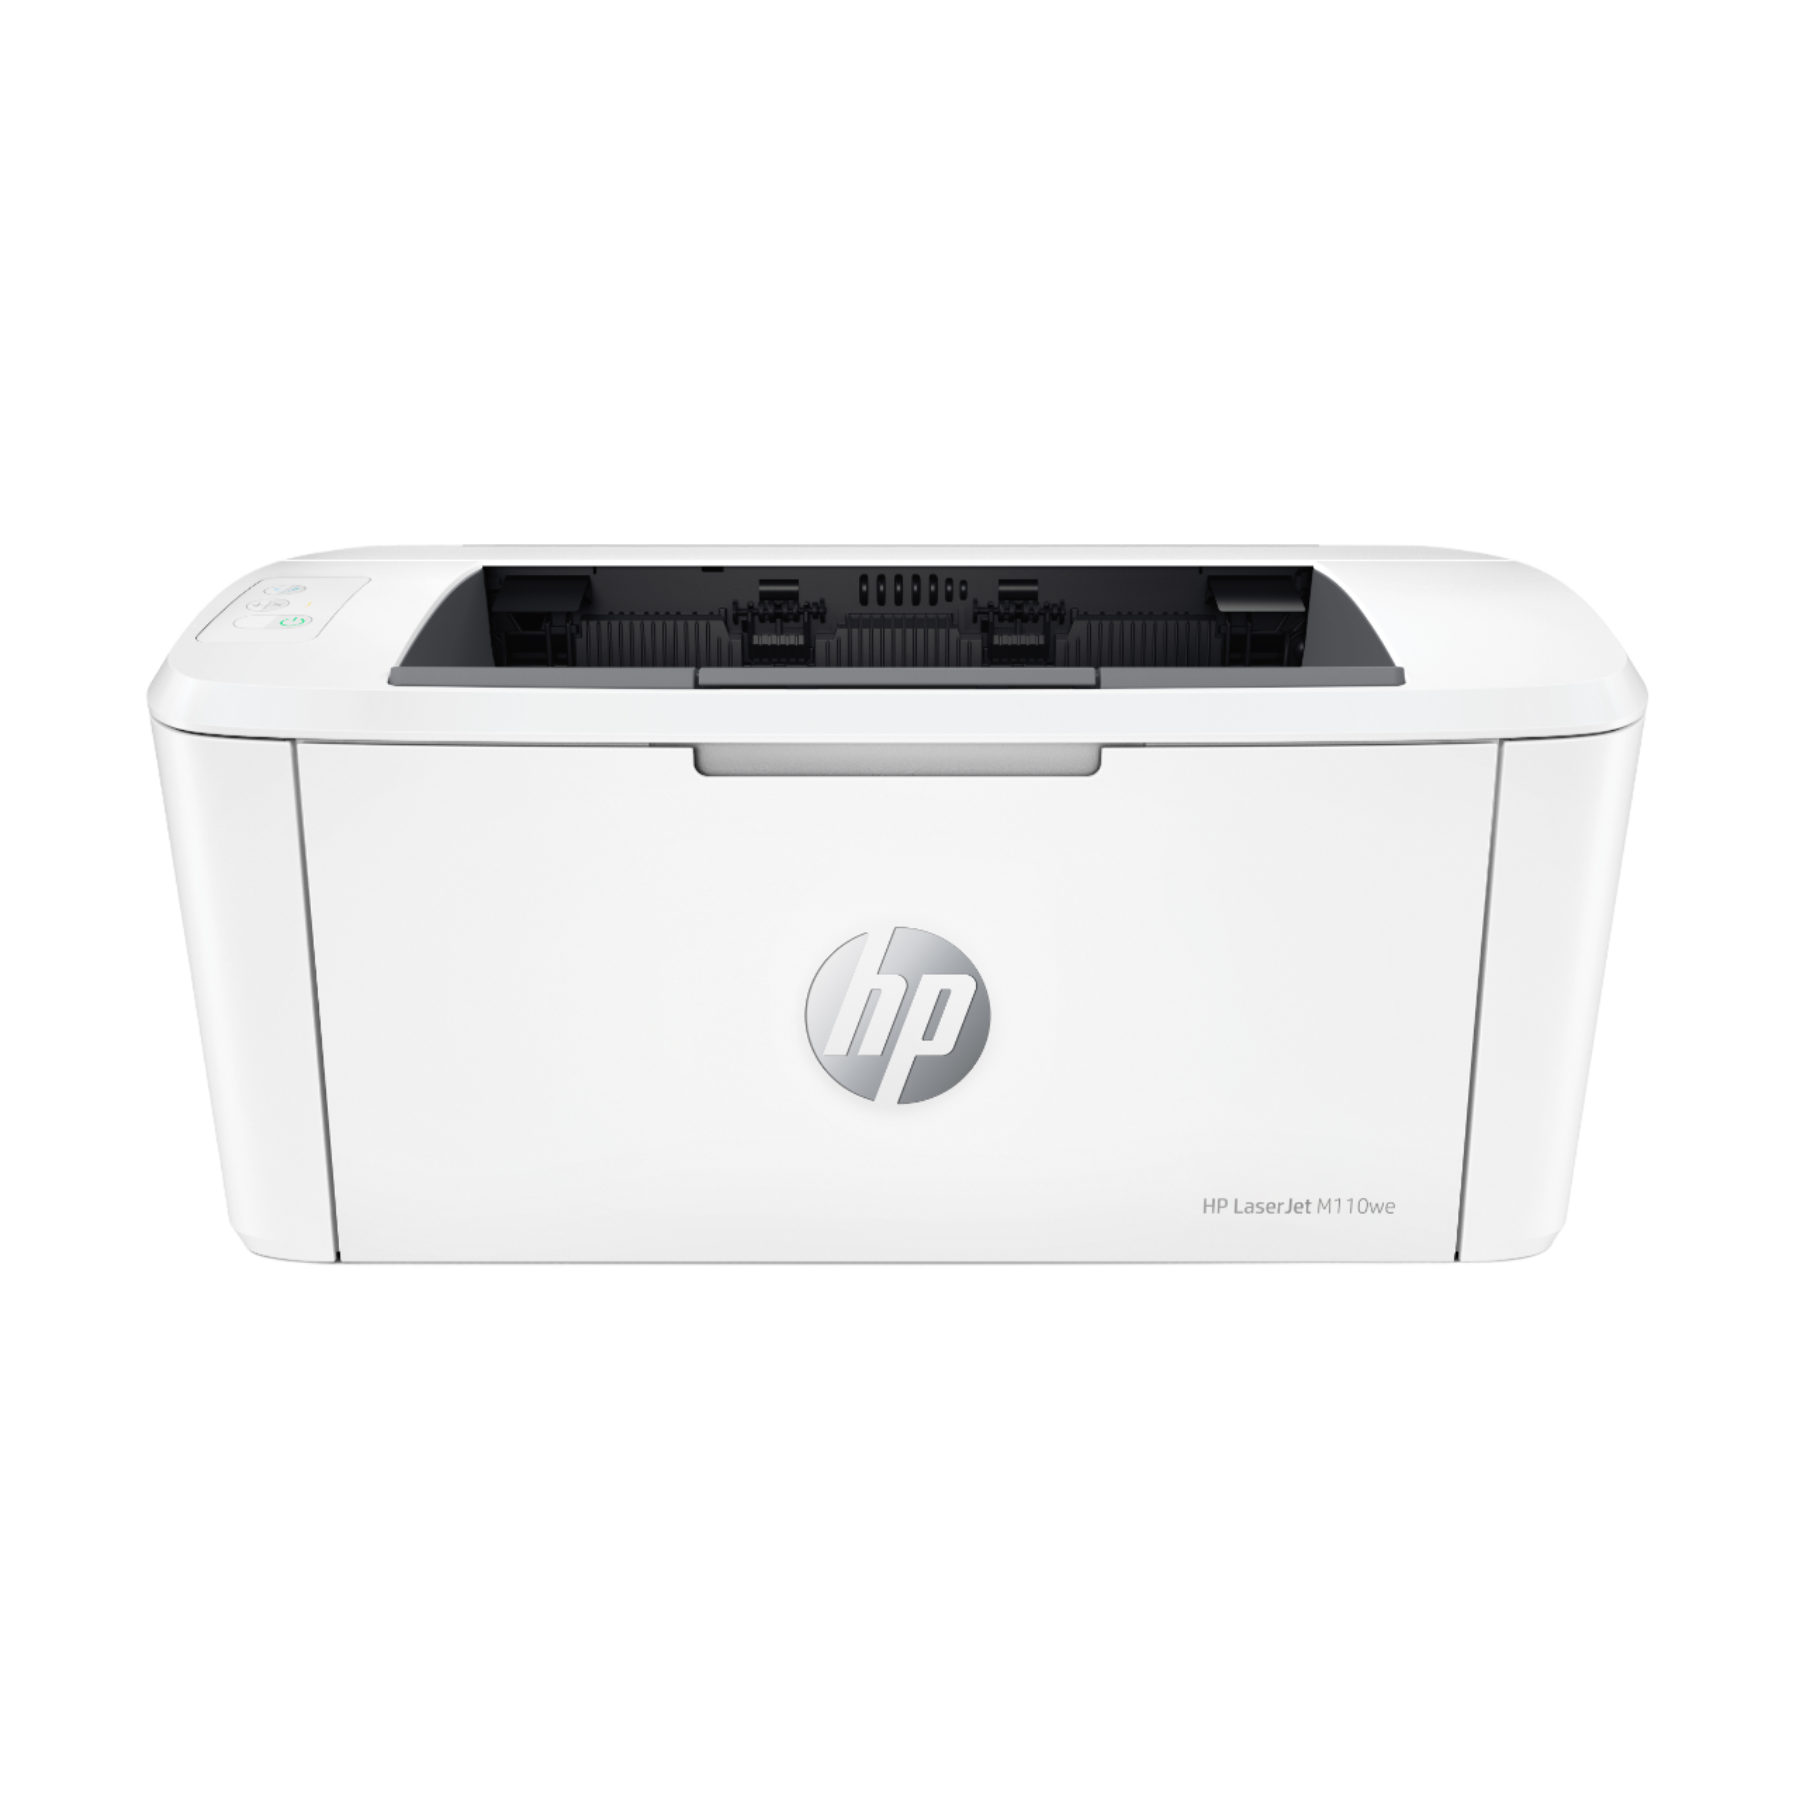 Aanbieding HP Laserjet M110w Printer - Alleen Printen Laser Zwart-wit - 0194850676970